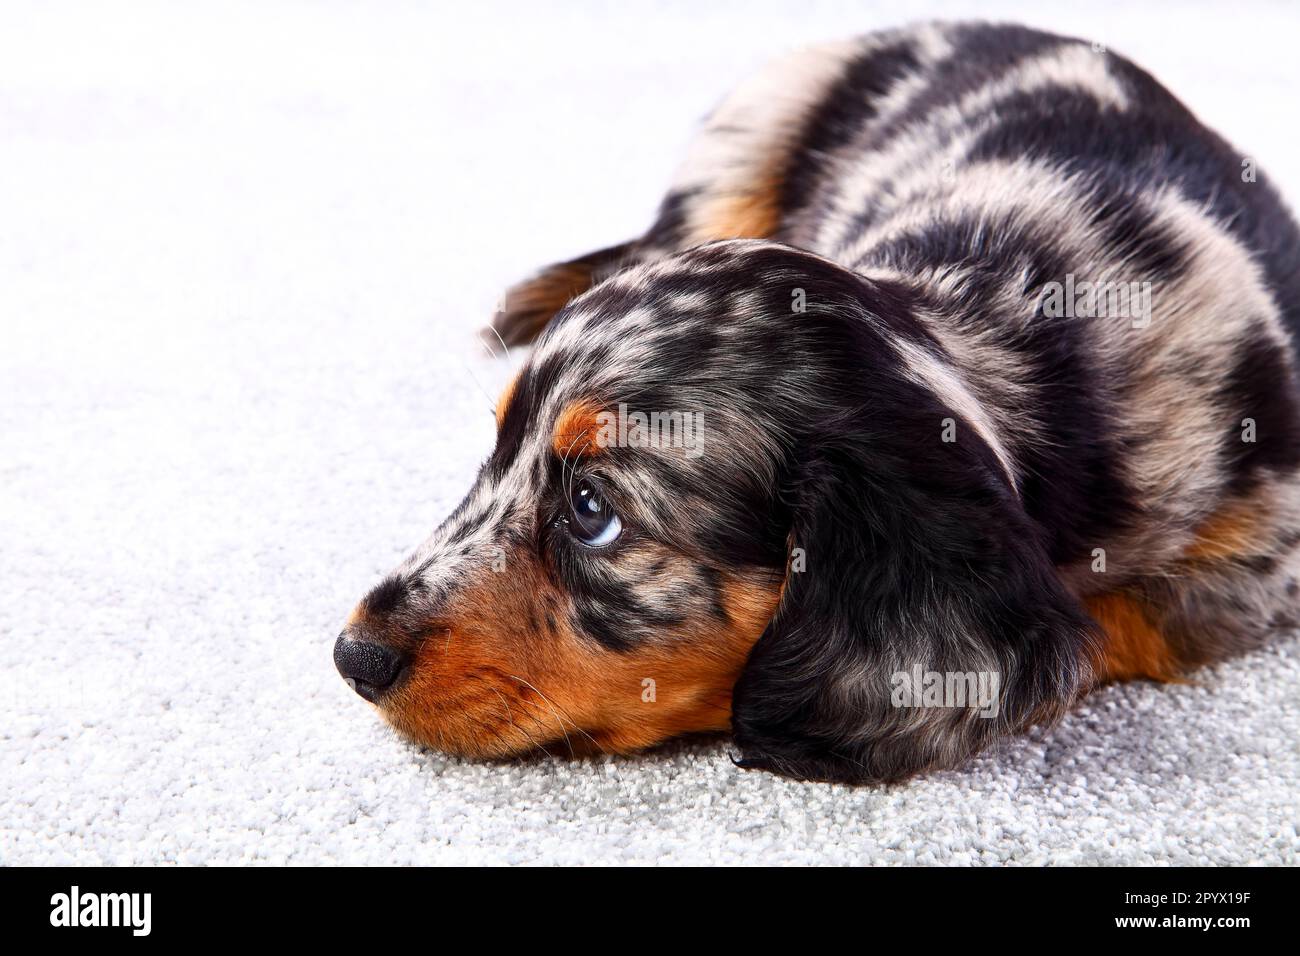 Sleepy dapple dachshund puppy laid on a grey carpet Stock Photo